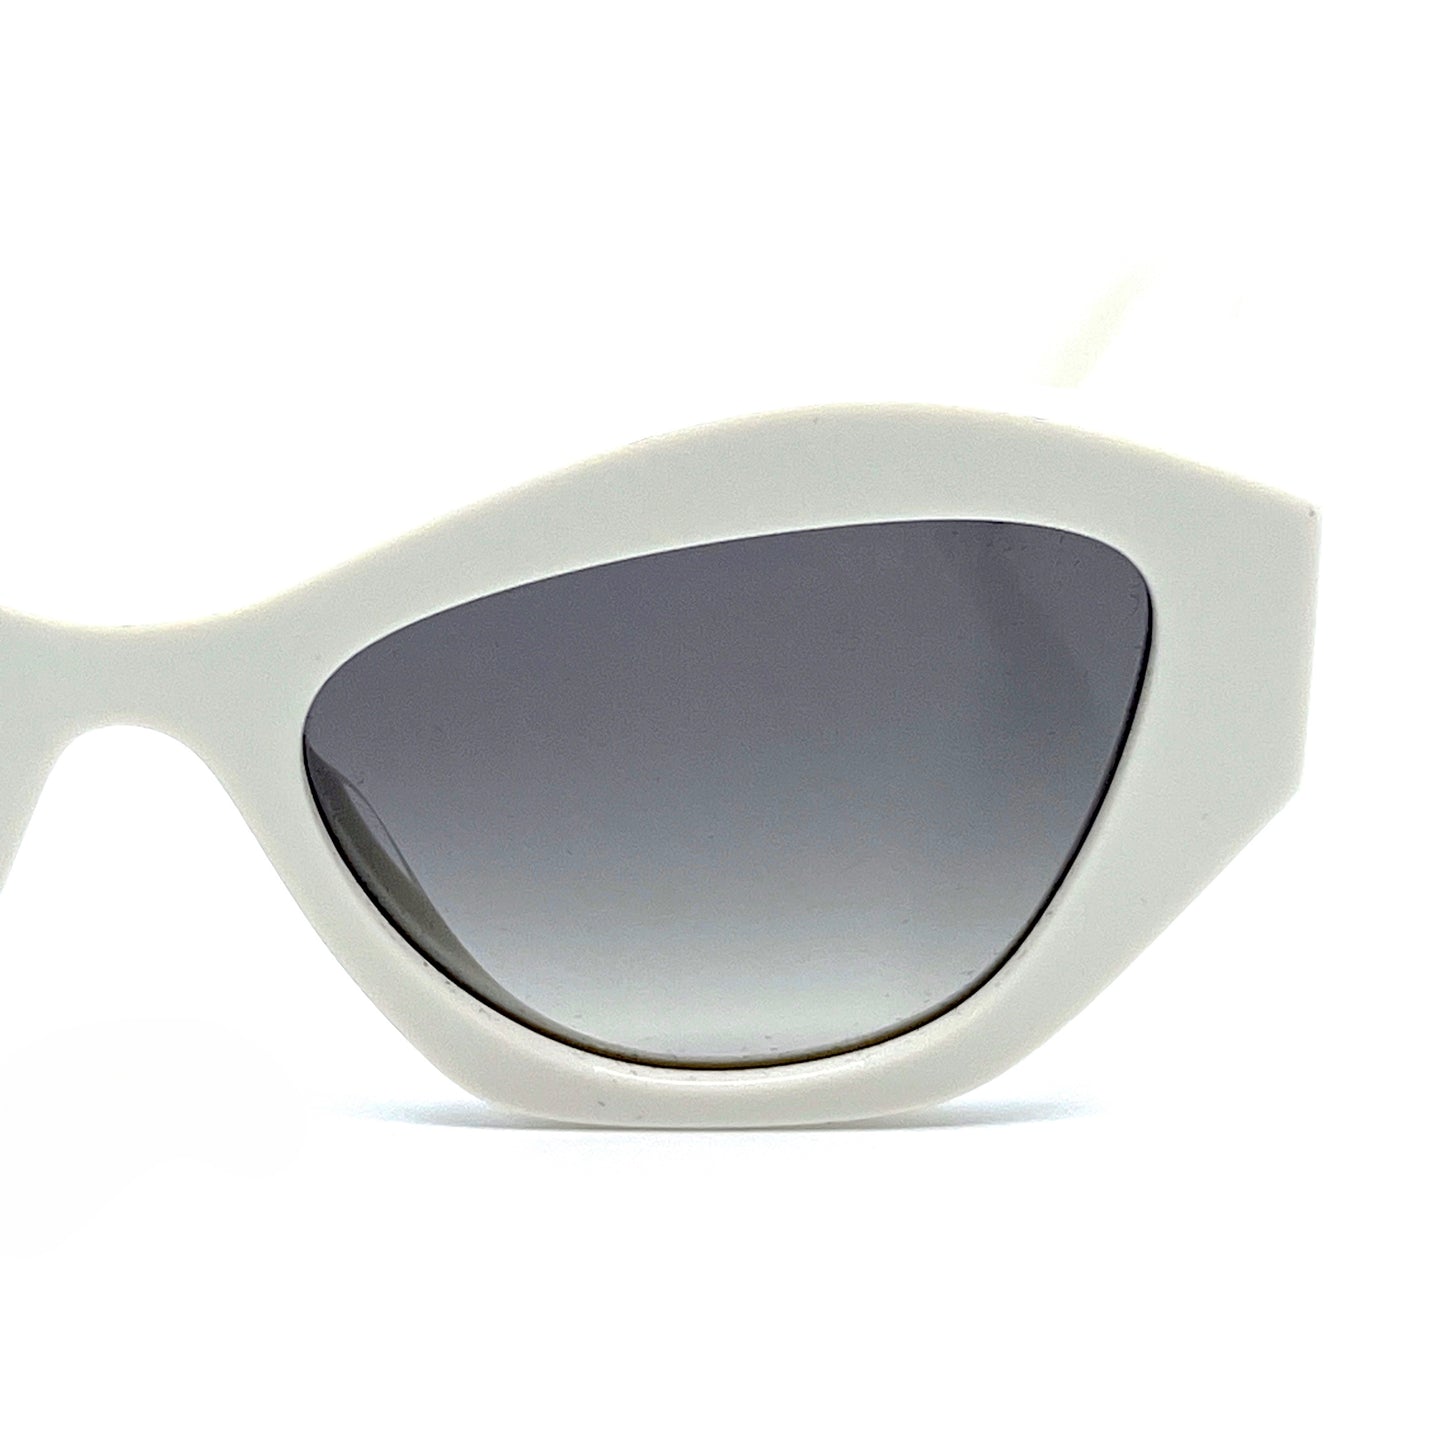 PRADA Sunglasses SPR07Y 142-130